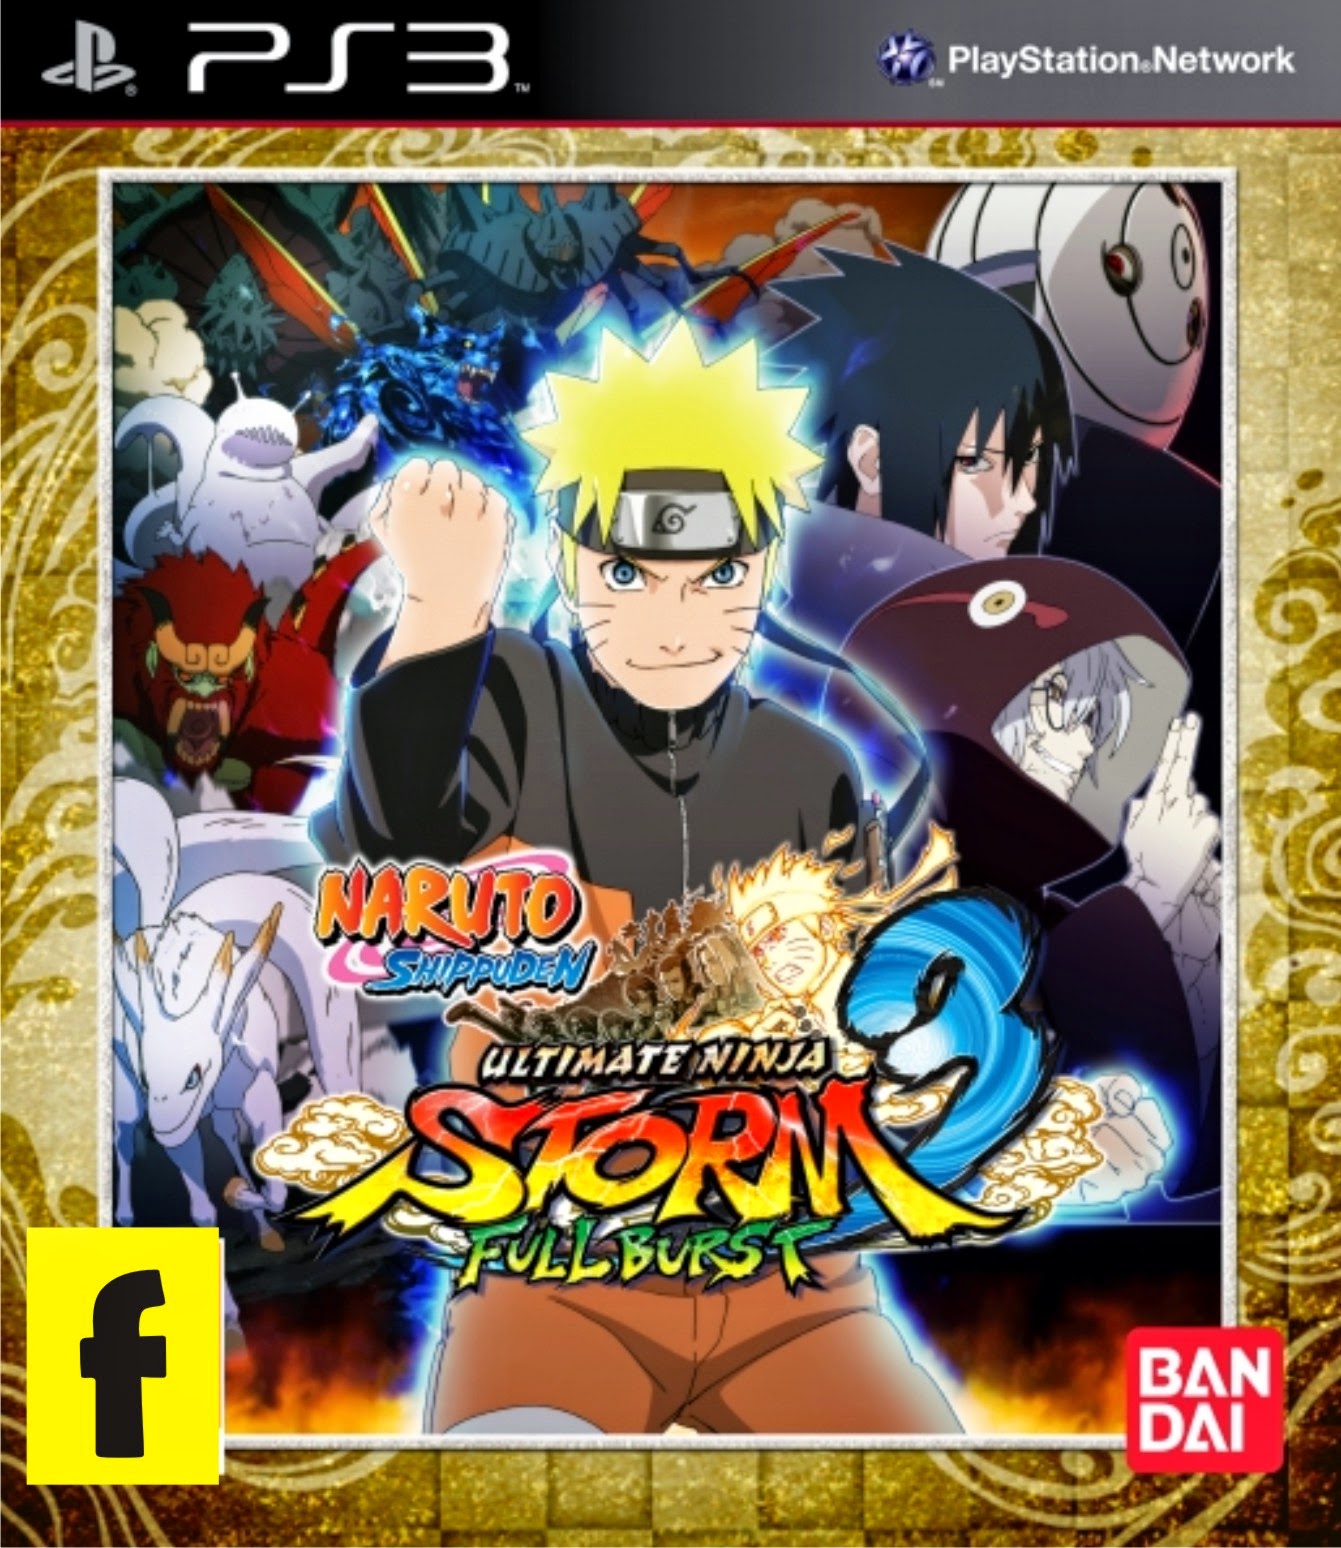 Naruto Shippuden Ultimate Ninja Storm 3 Full Burst PS3